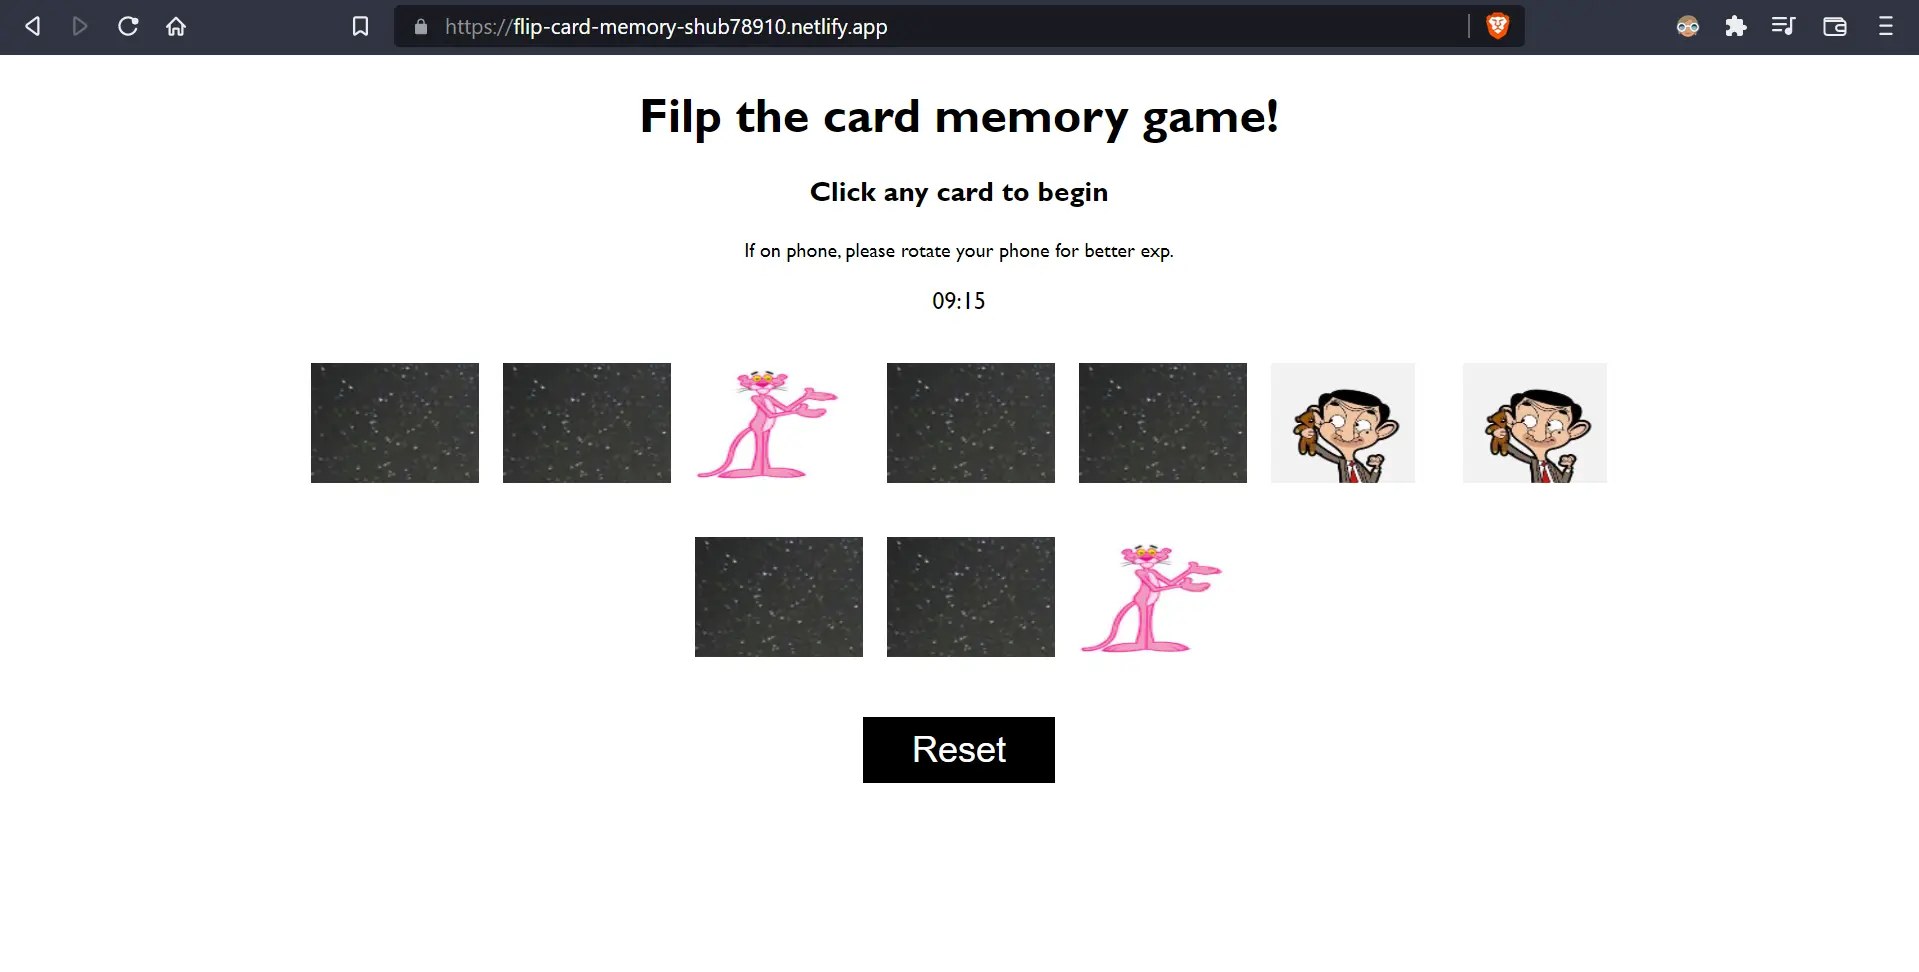 Flip the card memory game